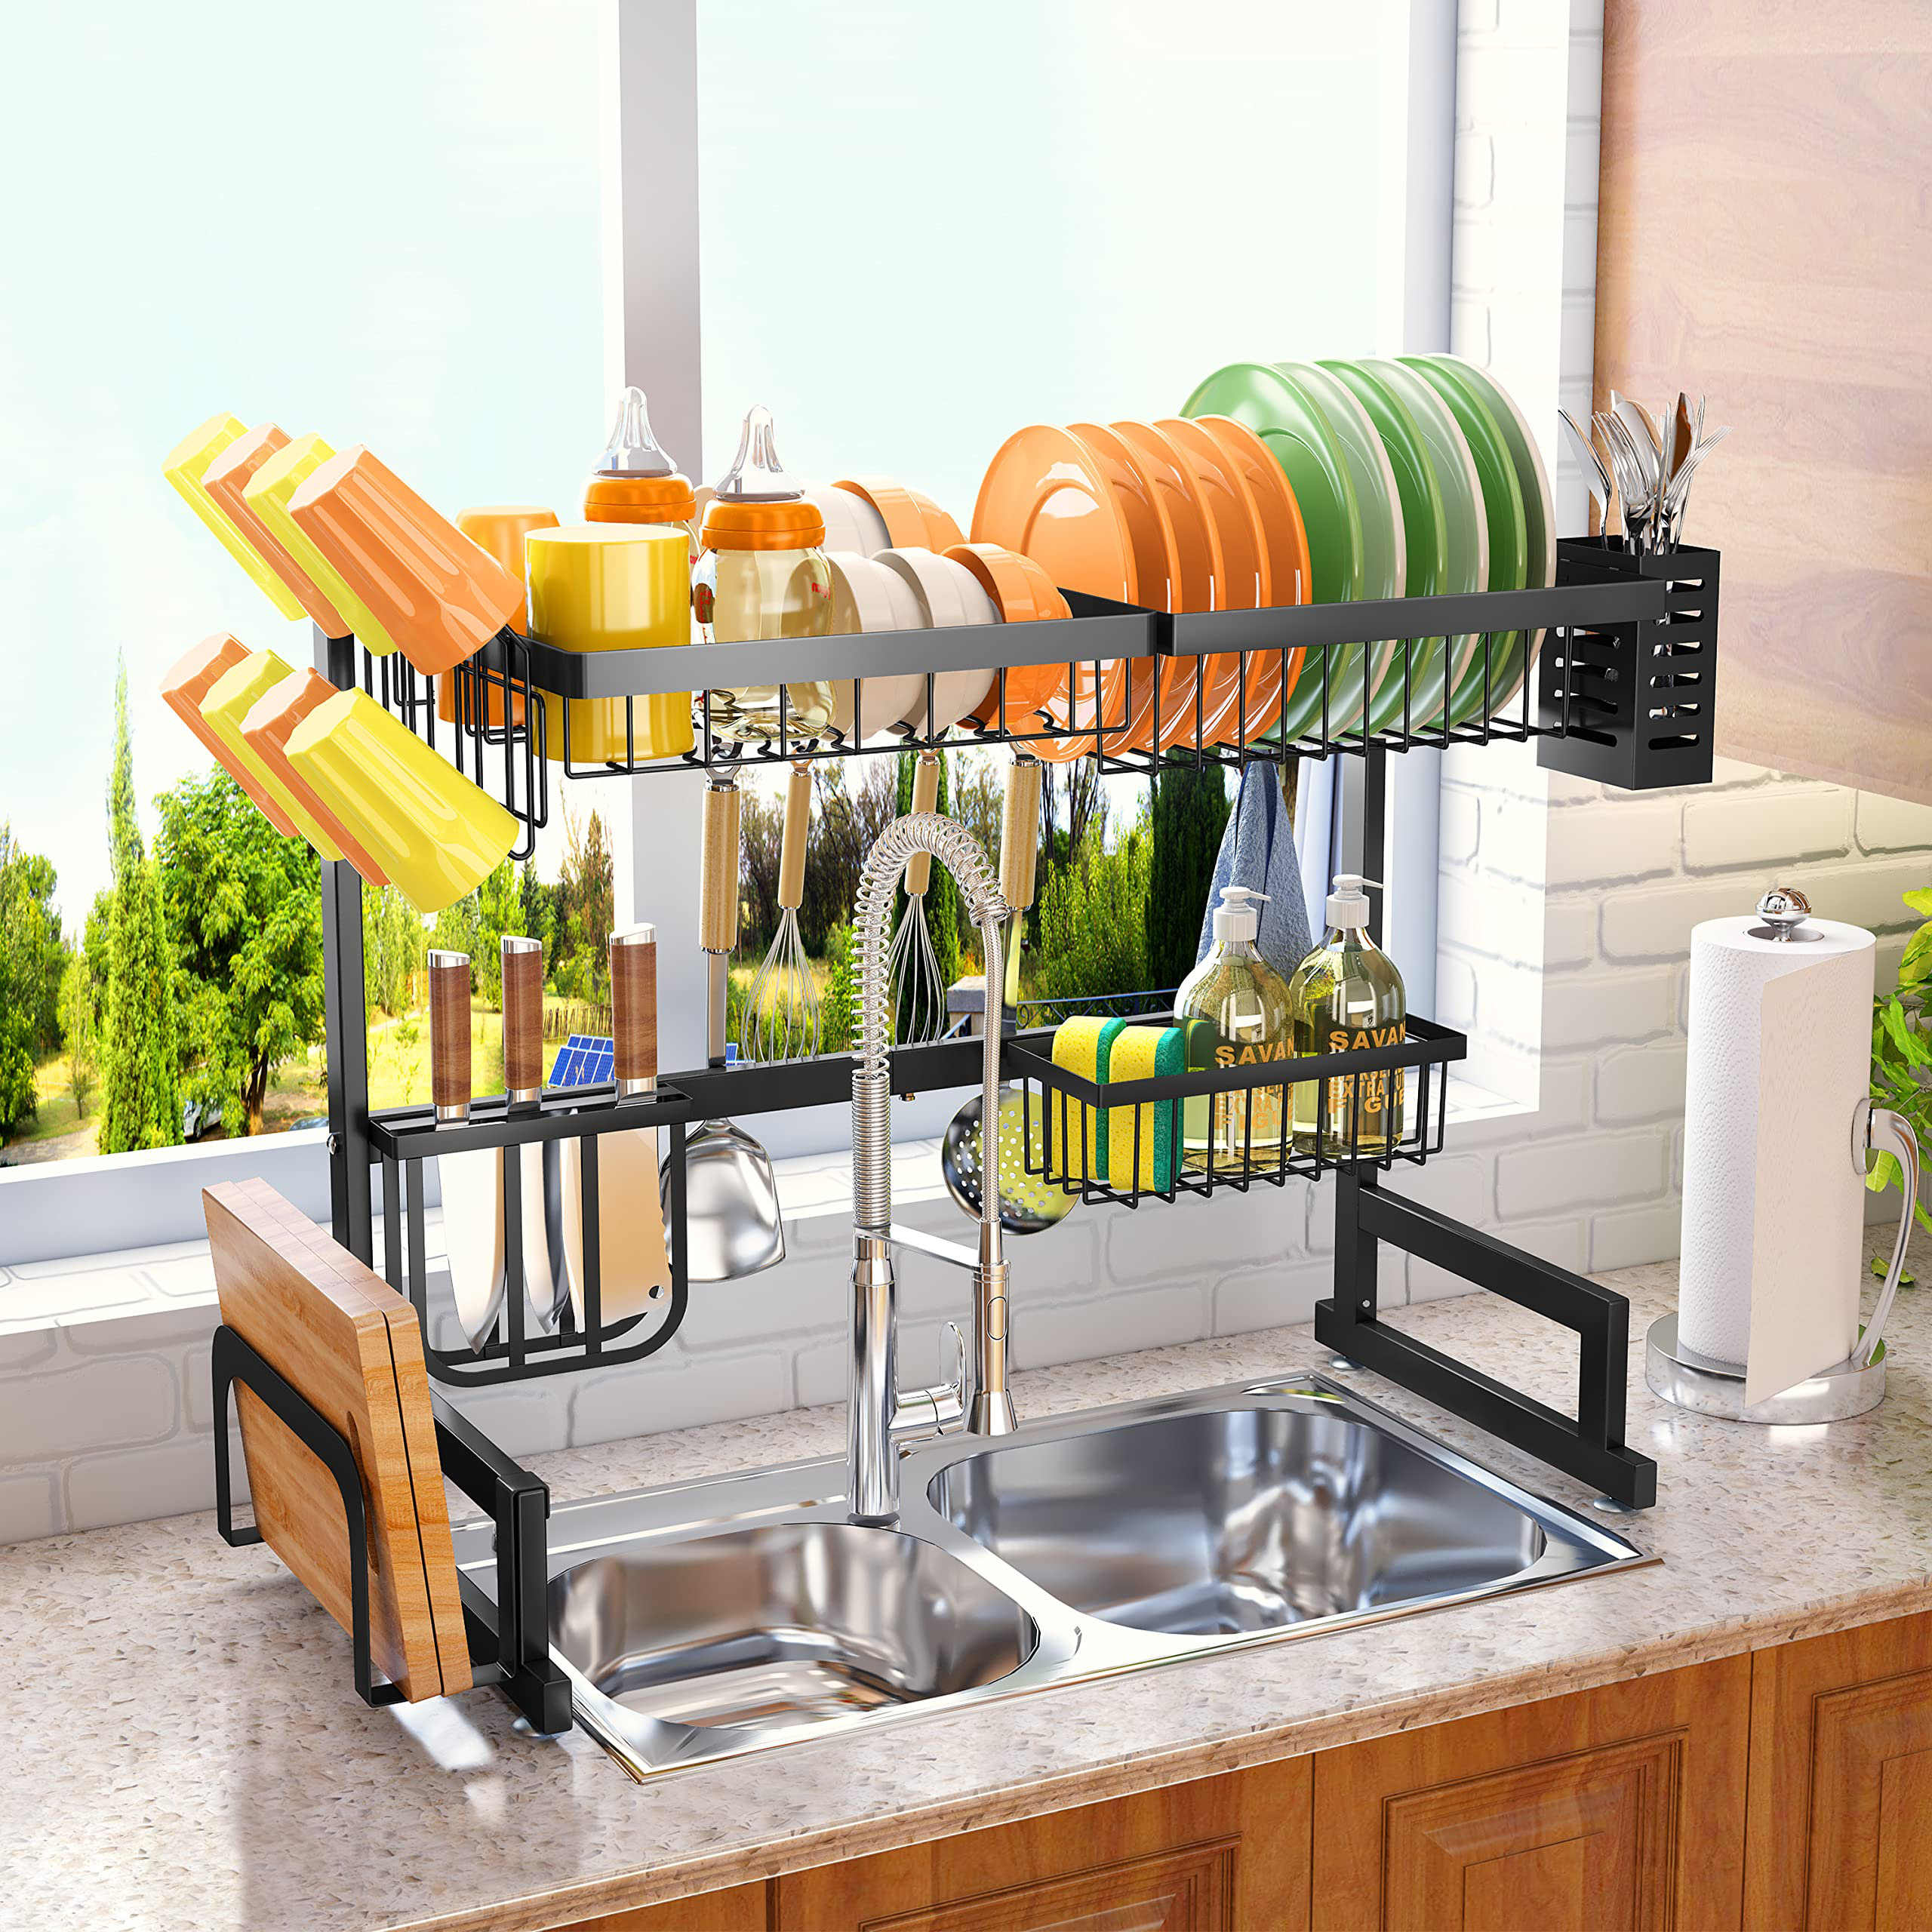 Dish Racks: Boosiny Over The Sink Dish Drying Rack 